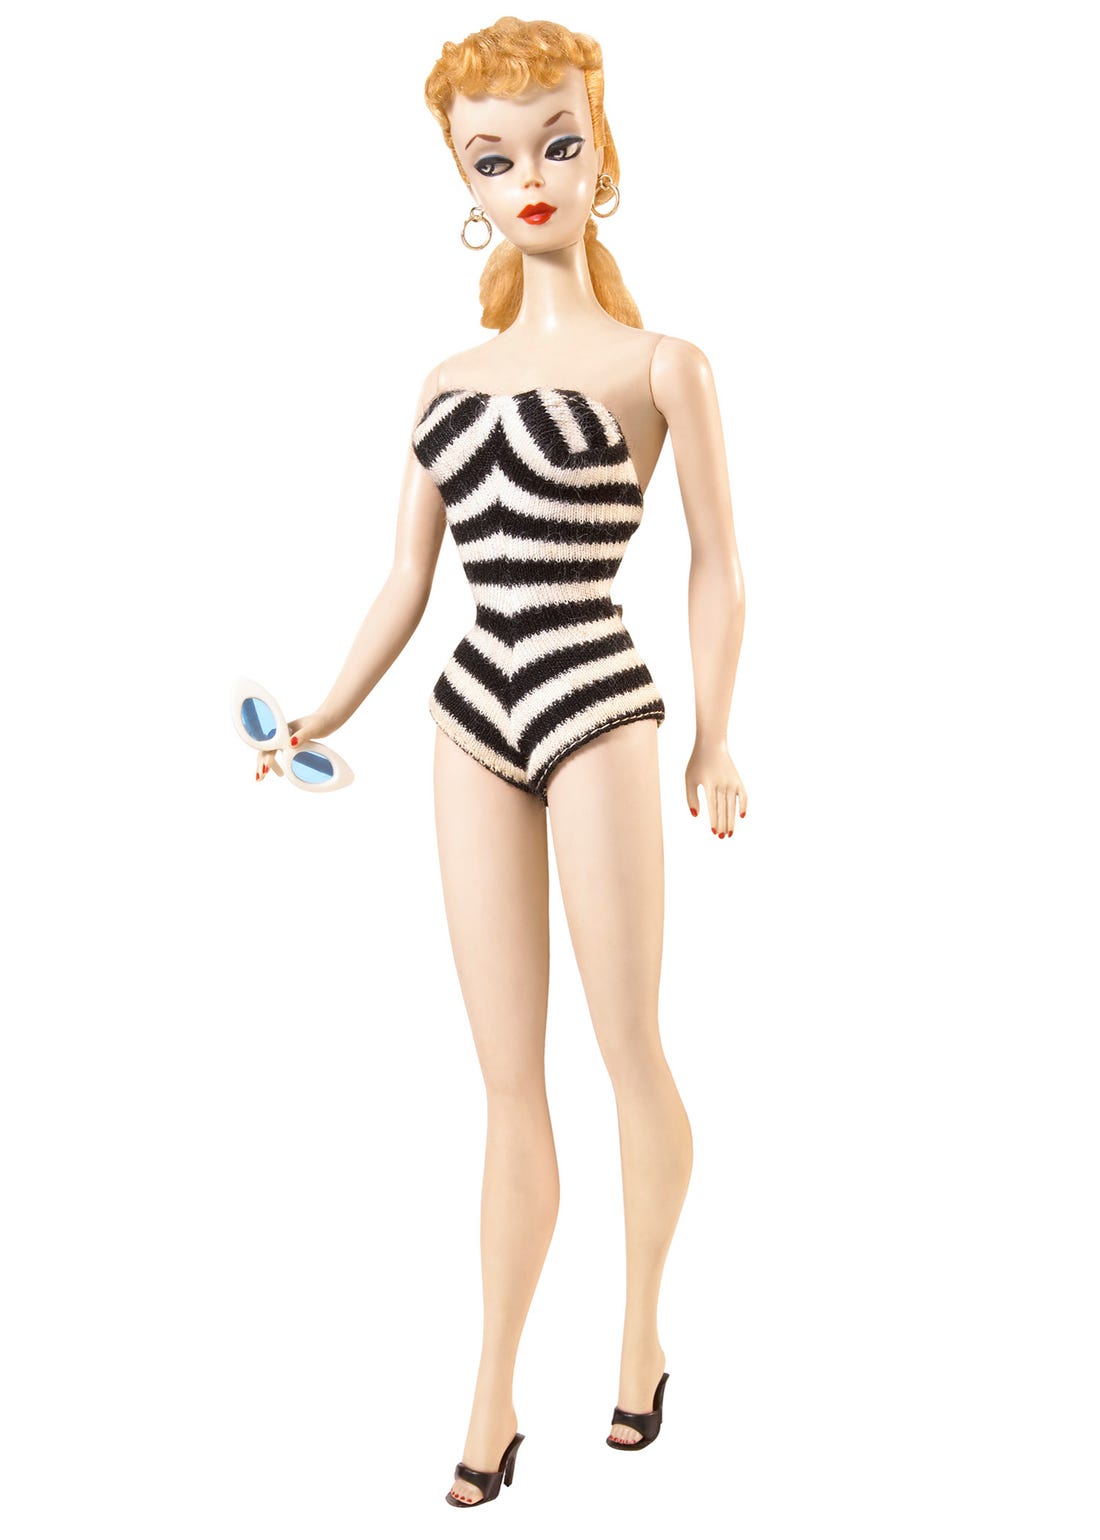 Mattel Barbie (1959)